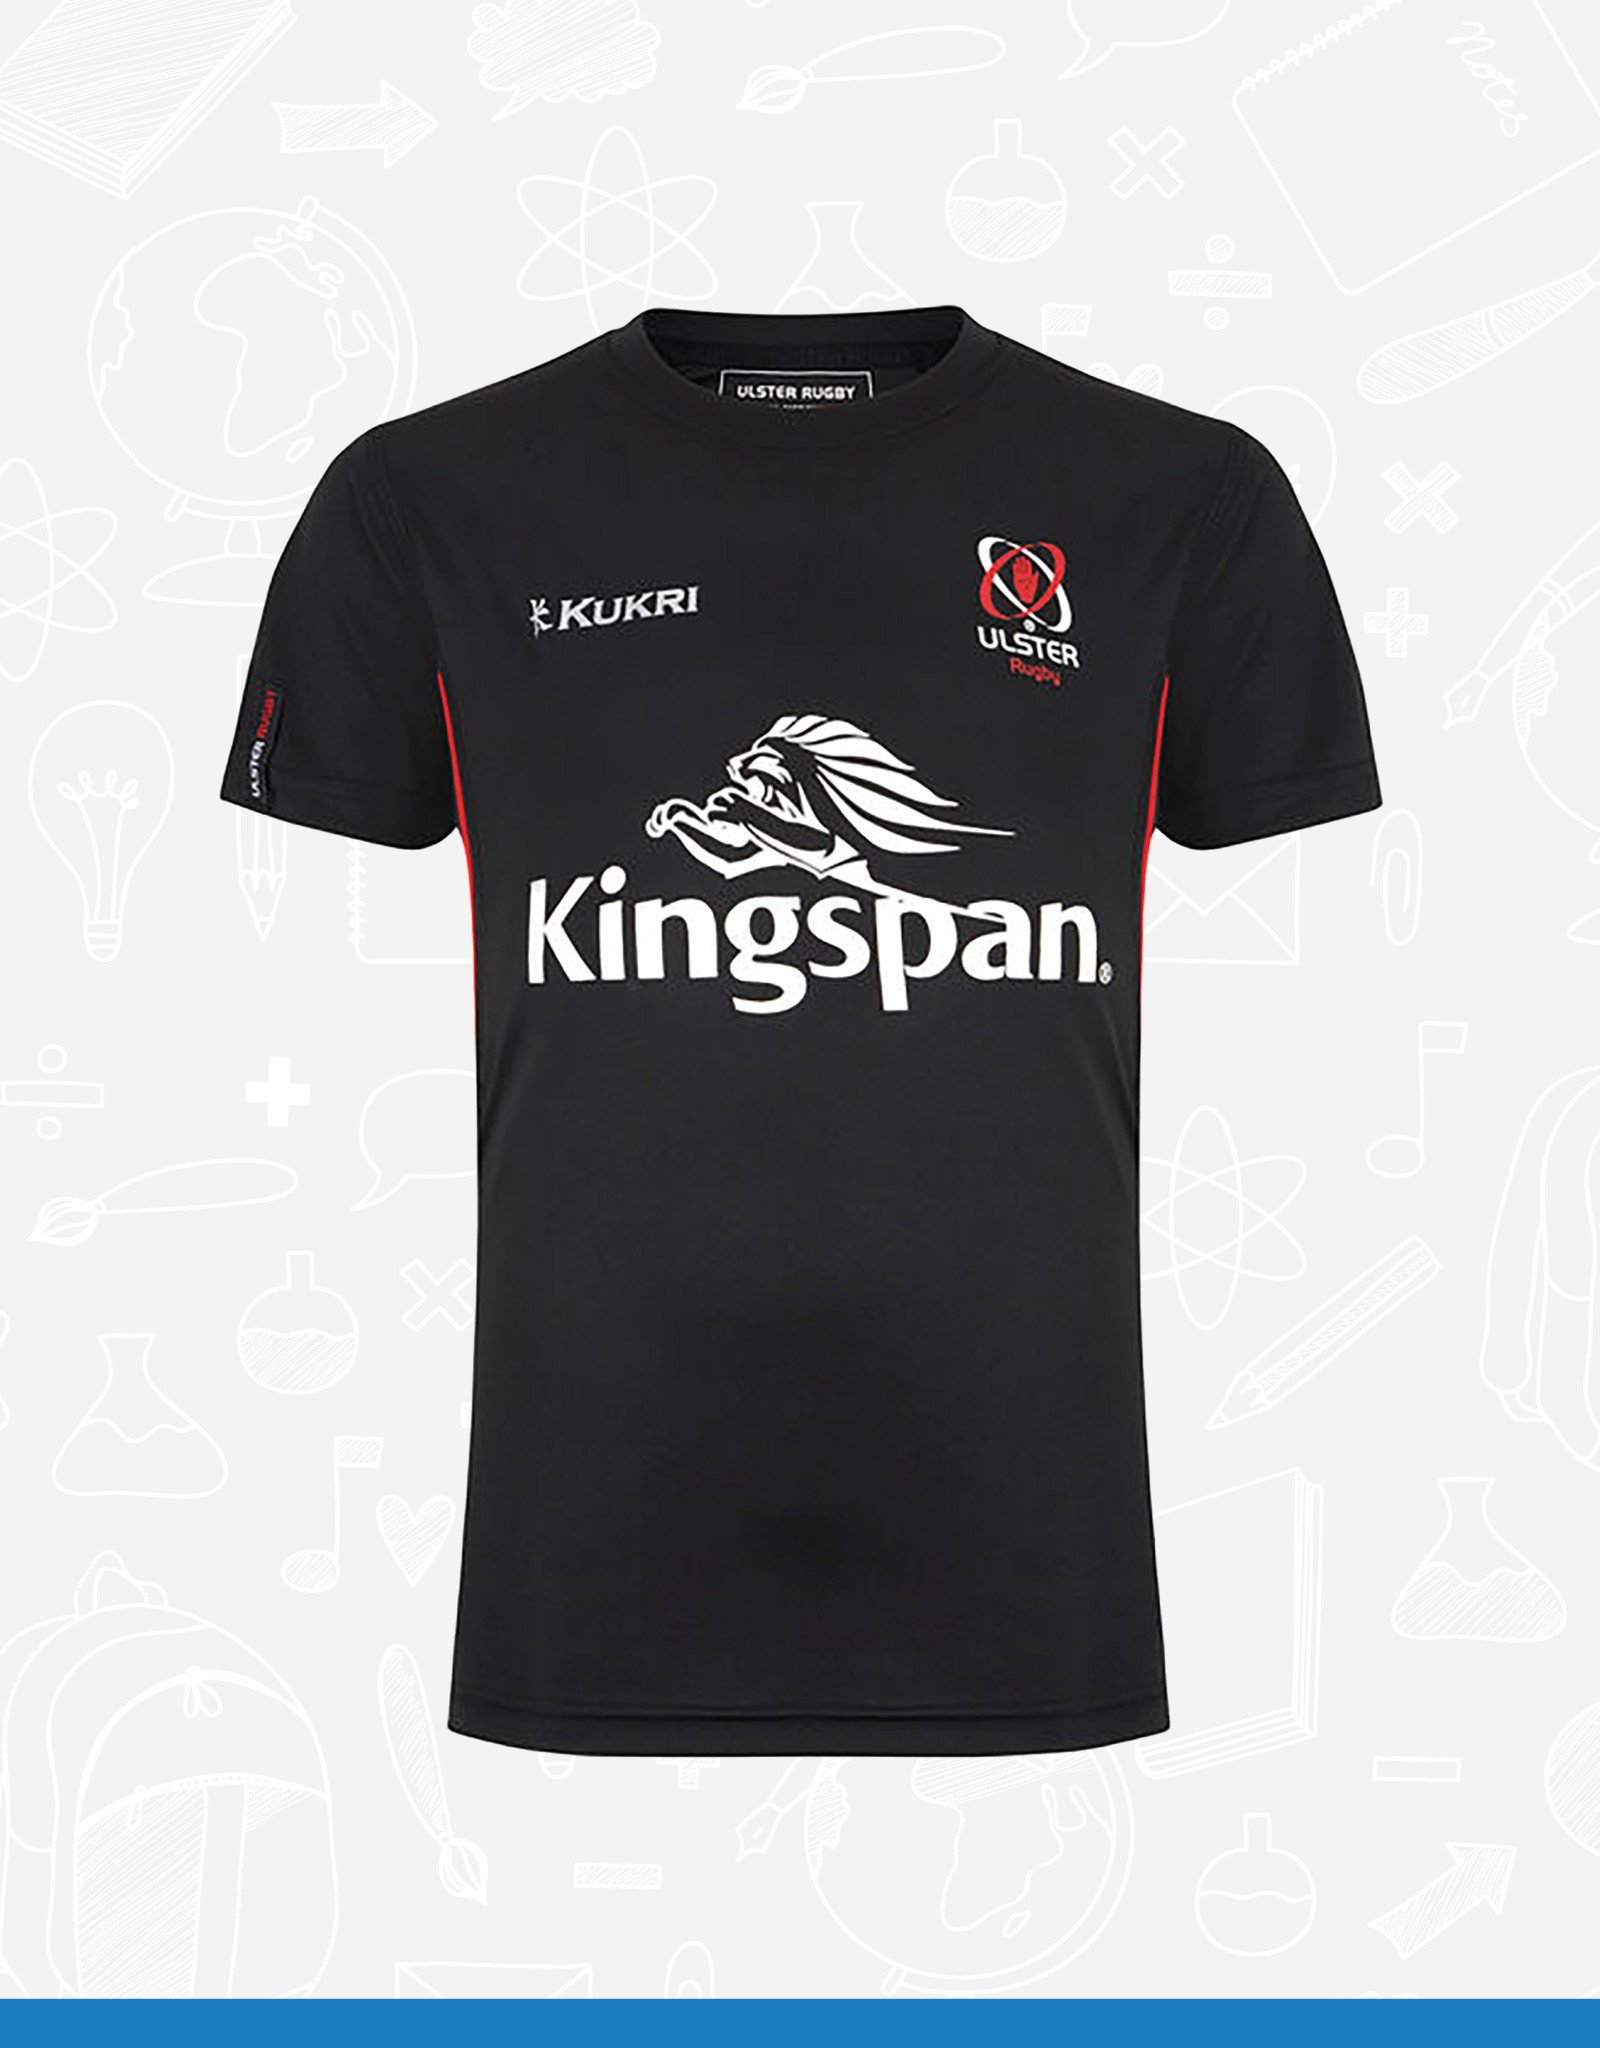 Kukri Ulster Rugby Kids Performance T-Shirt